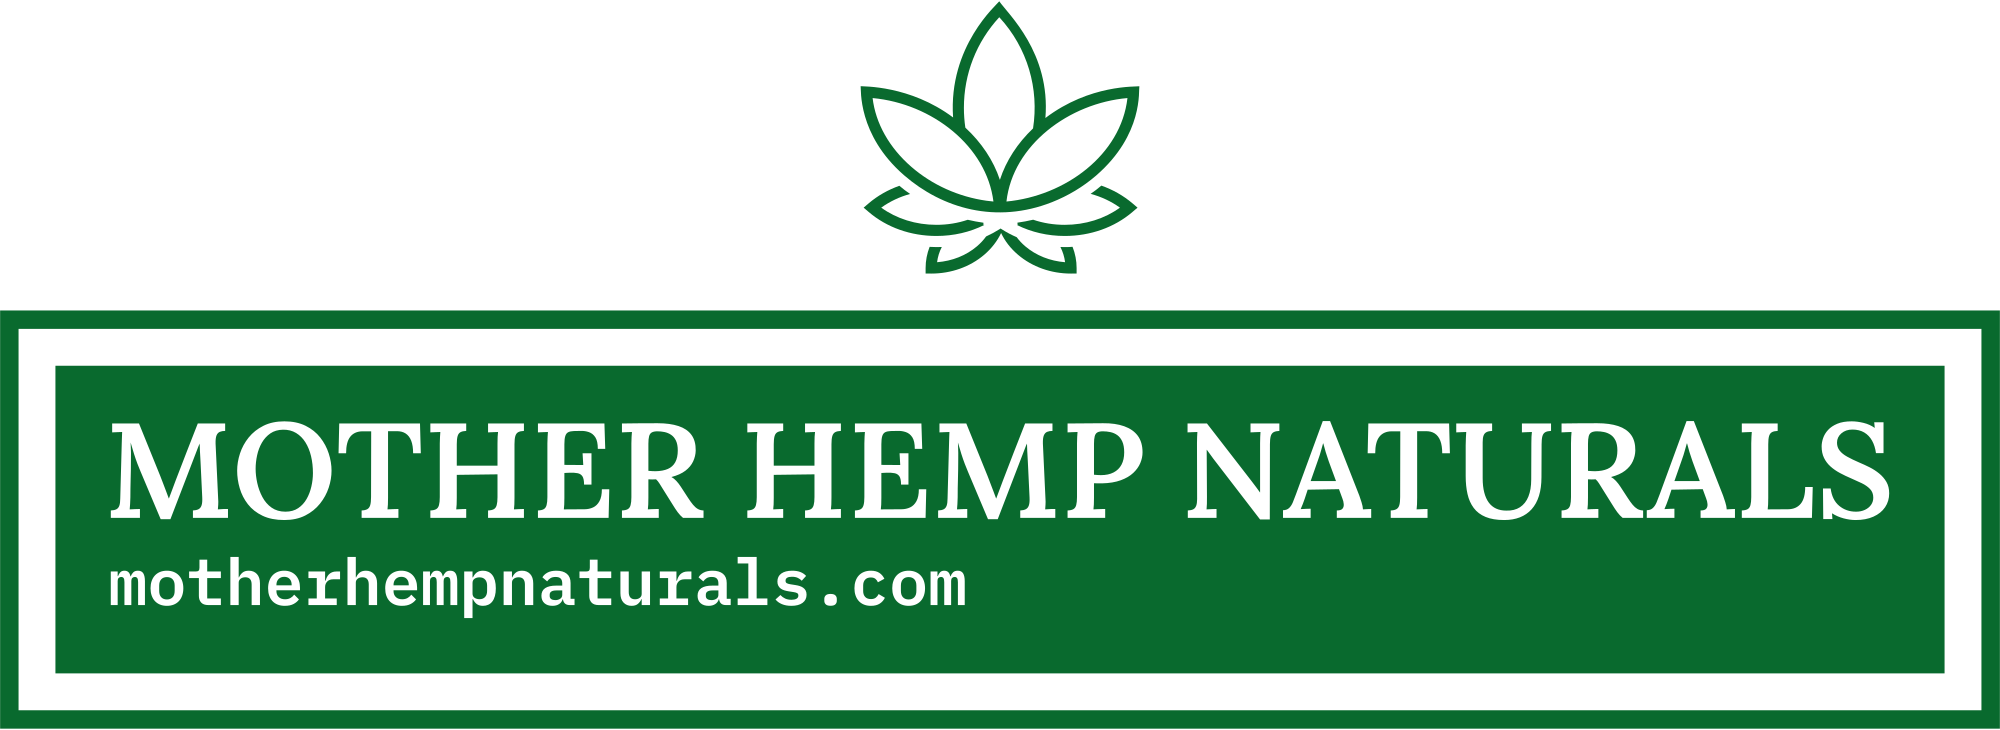 mother-hemp-naturals-high-resolution-logo-color-on-transparent-background